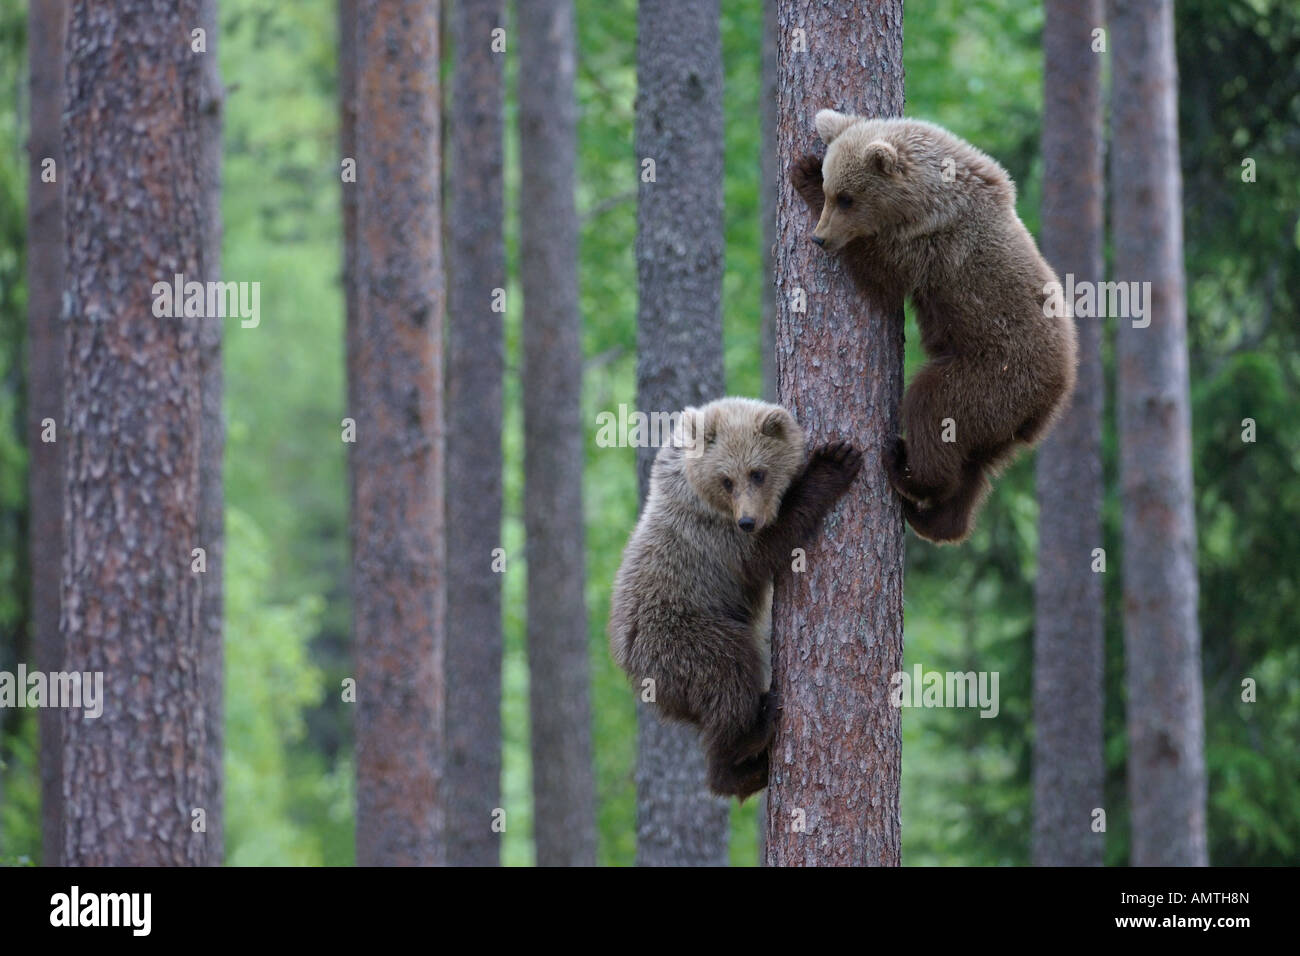 European brown bear Ursus arctos cub climbing pine tree in taiga forest Martinselkonen Finland June Stock Photo